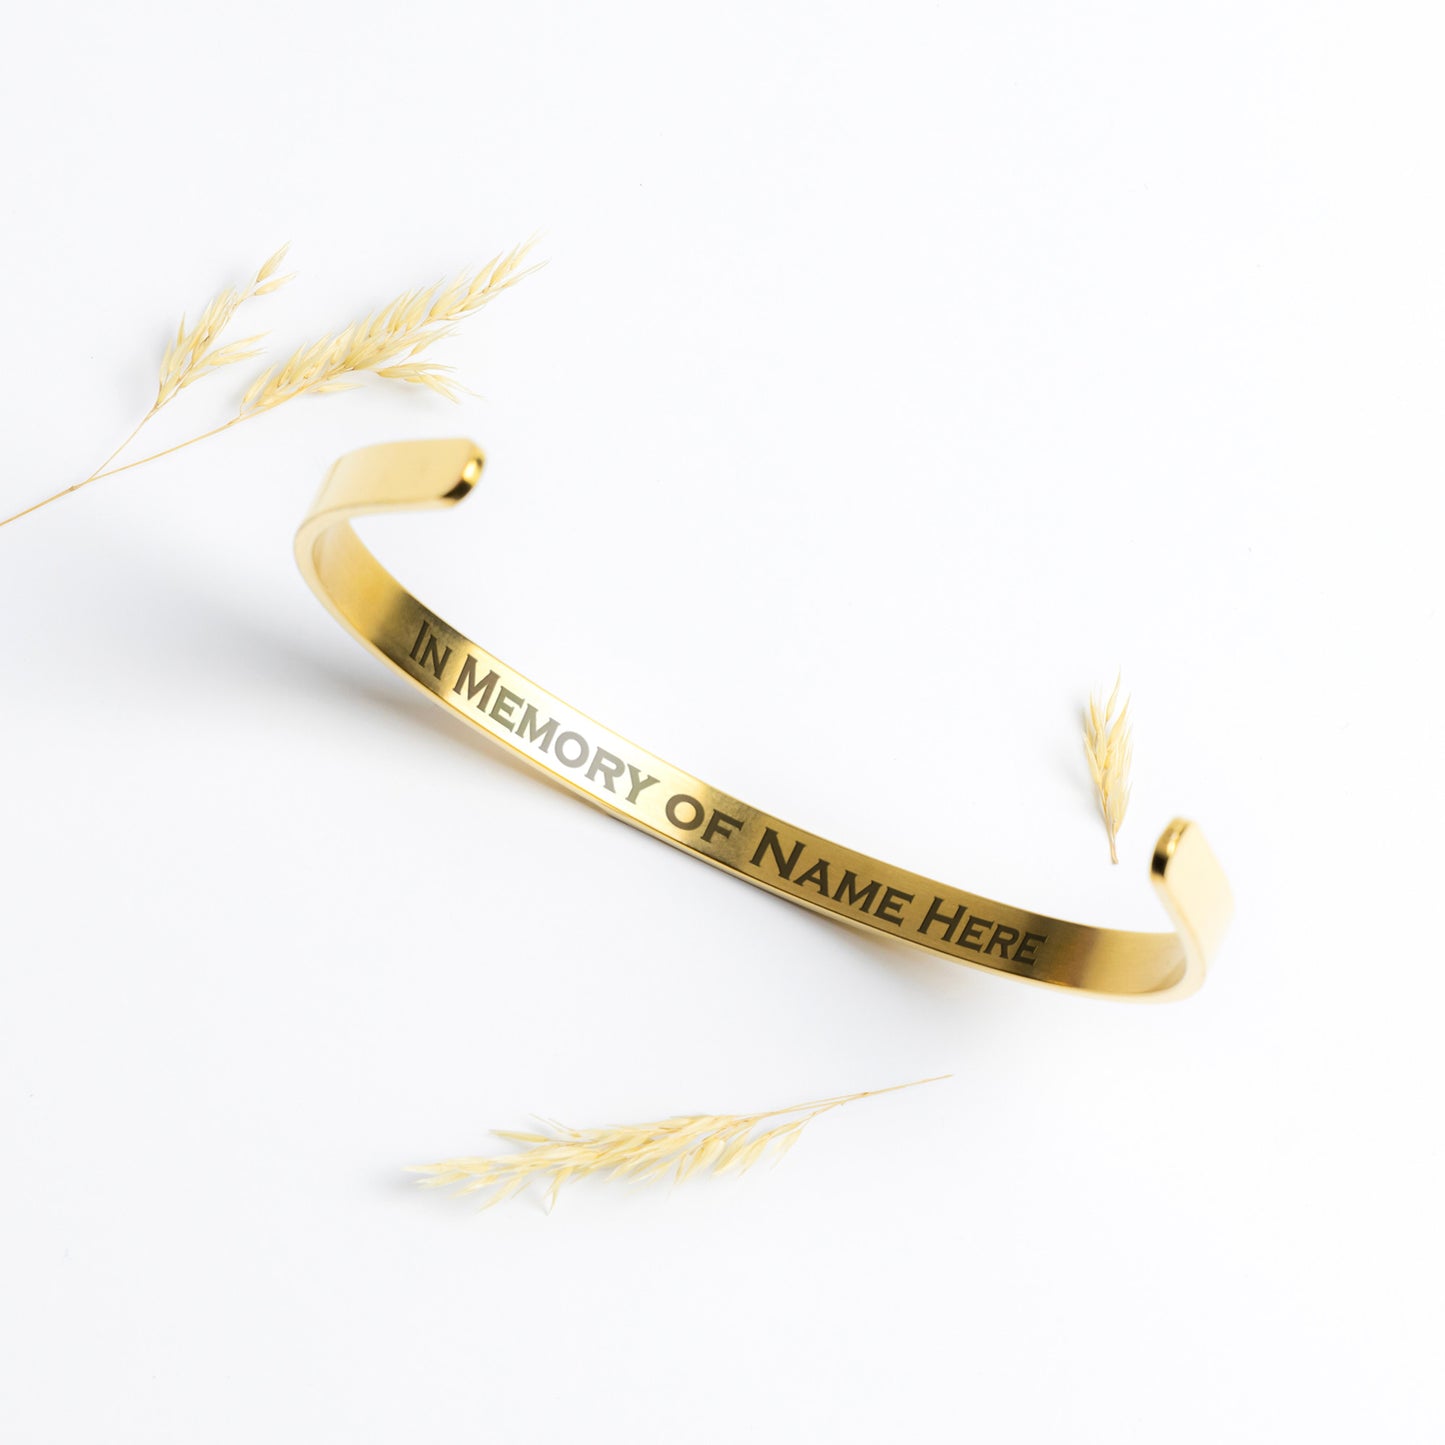 Personalized Cervical Cancer Awareness Cuff Bracelet